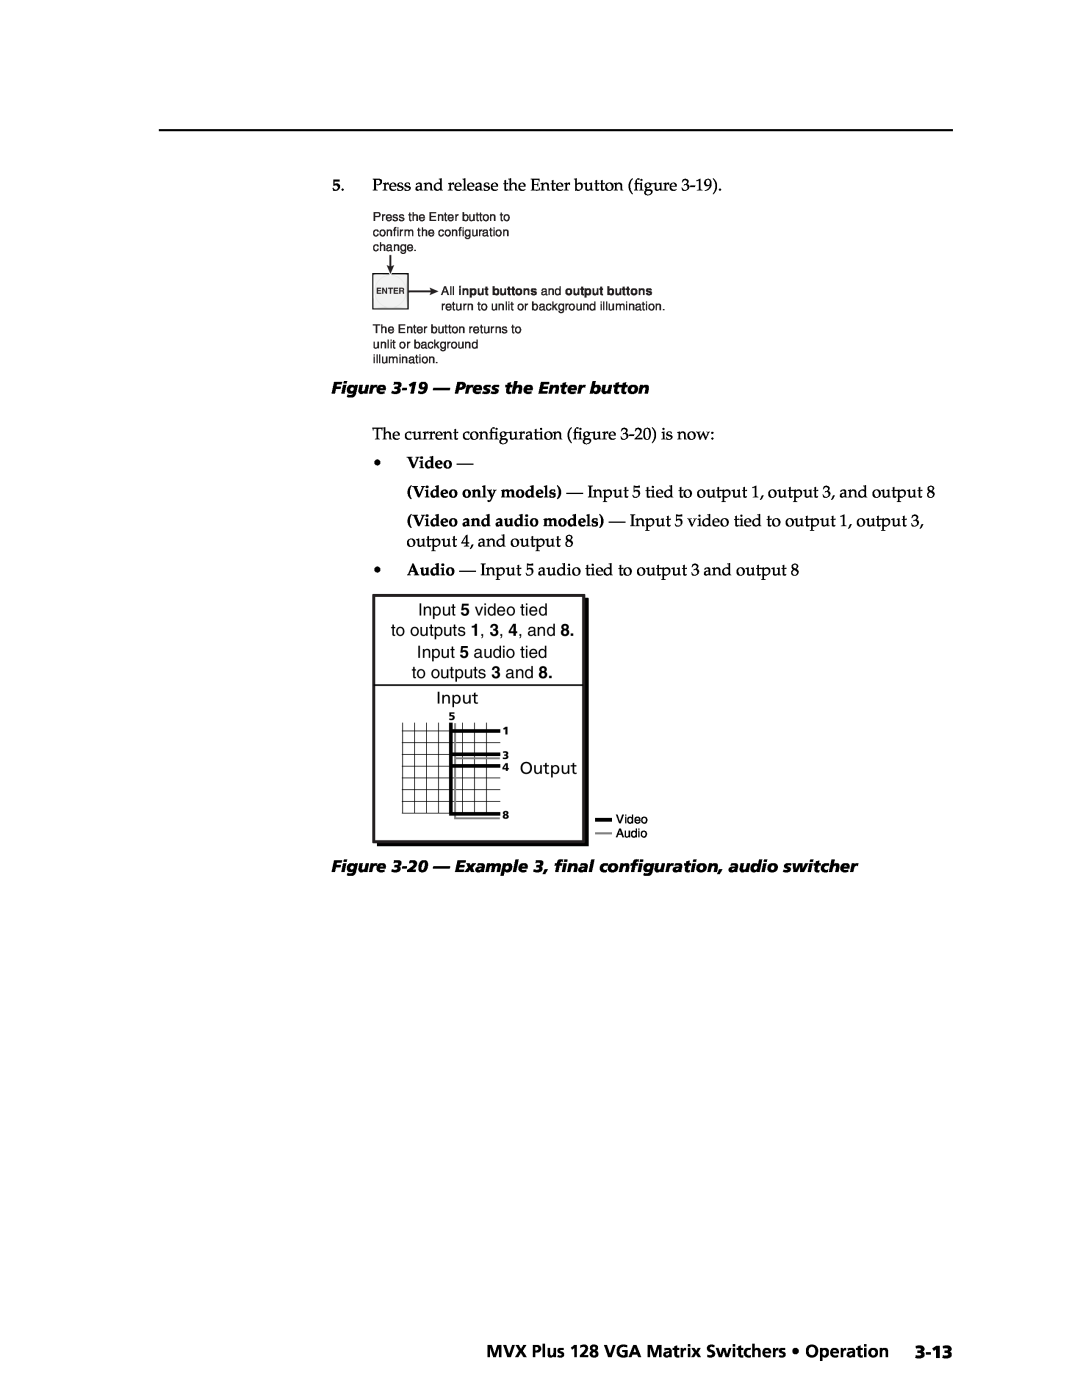 Extron electronic MVX PLUS 128 manual 19 - Press the Enter button, Video, 20 - Example 3, ﬁnal conﬁguration, audio switcher 